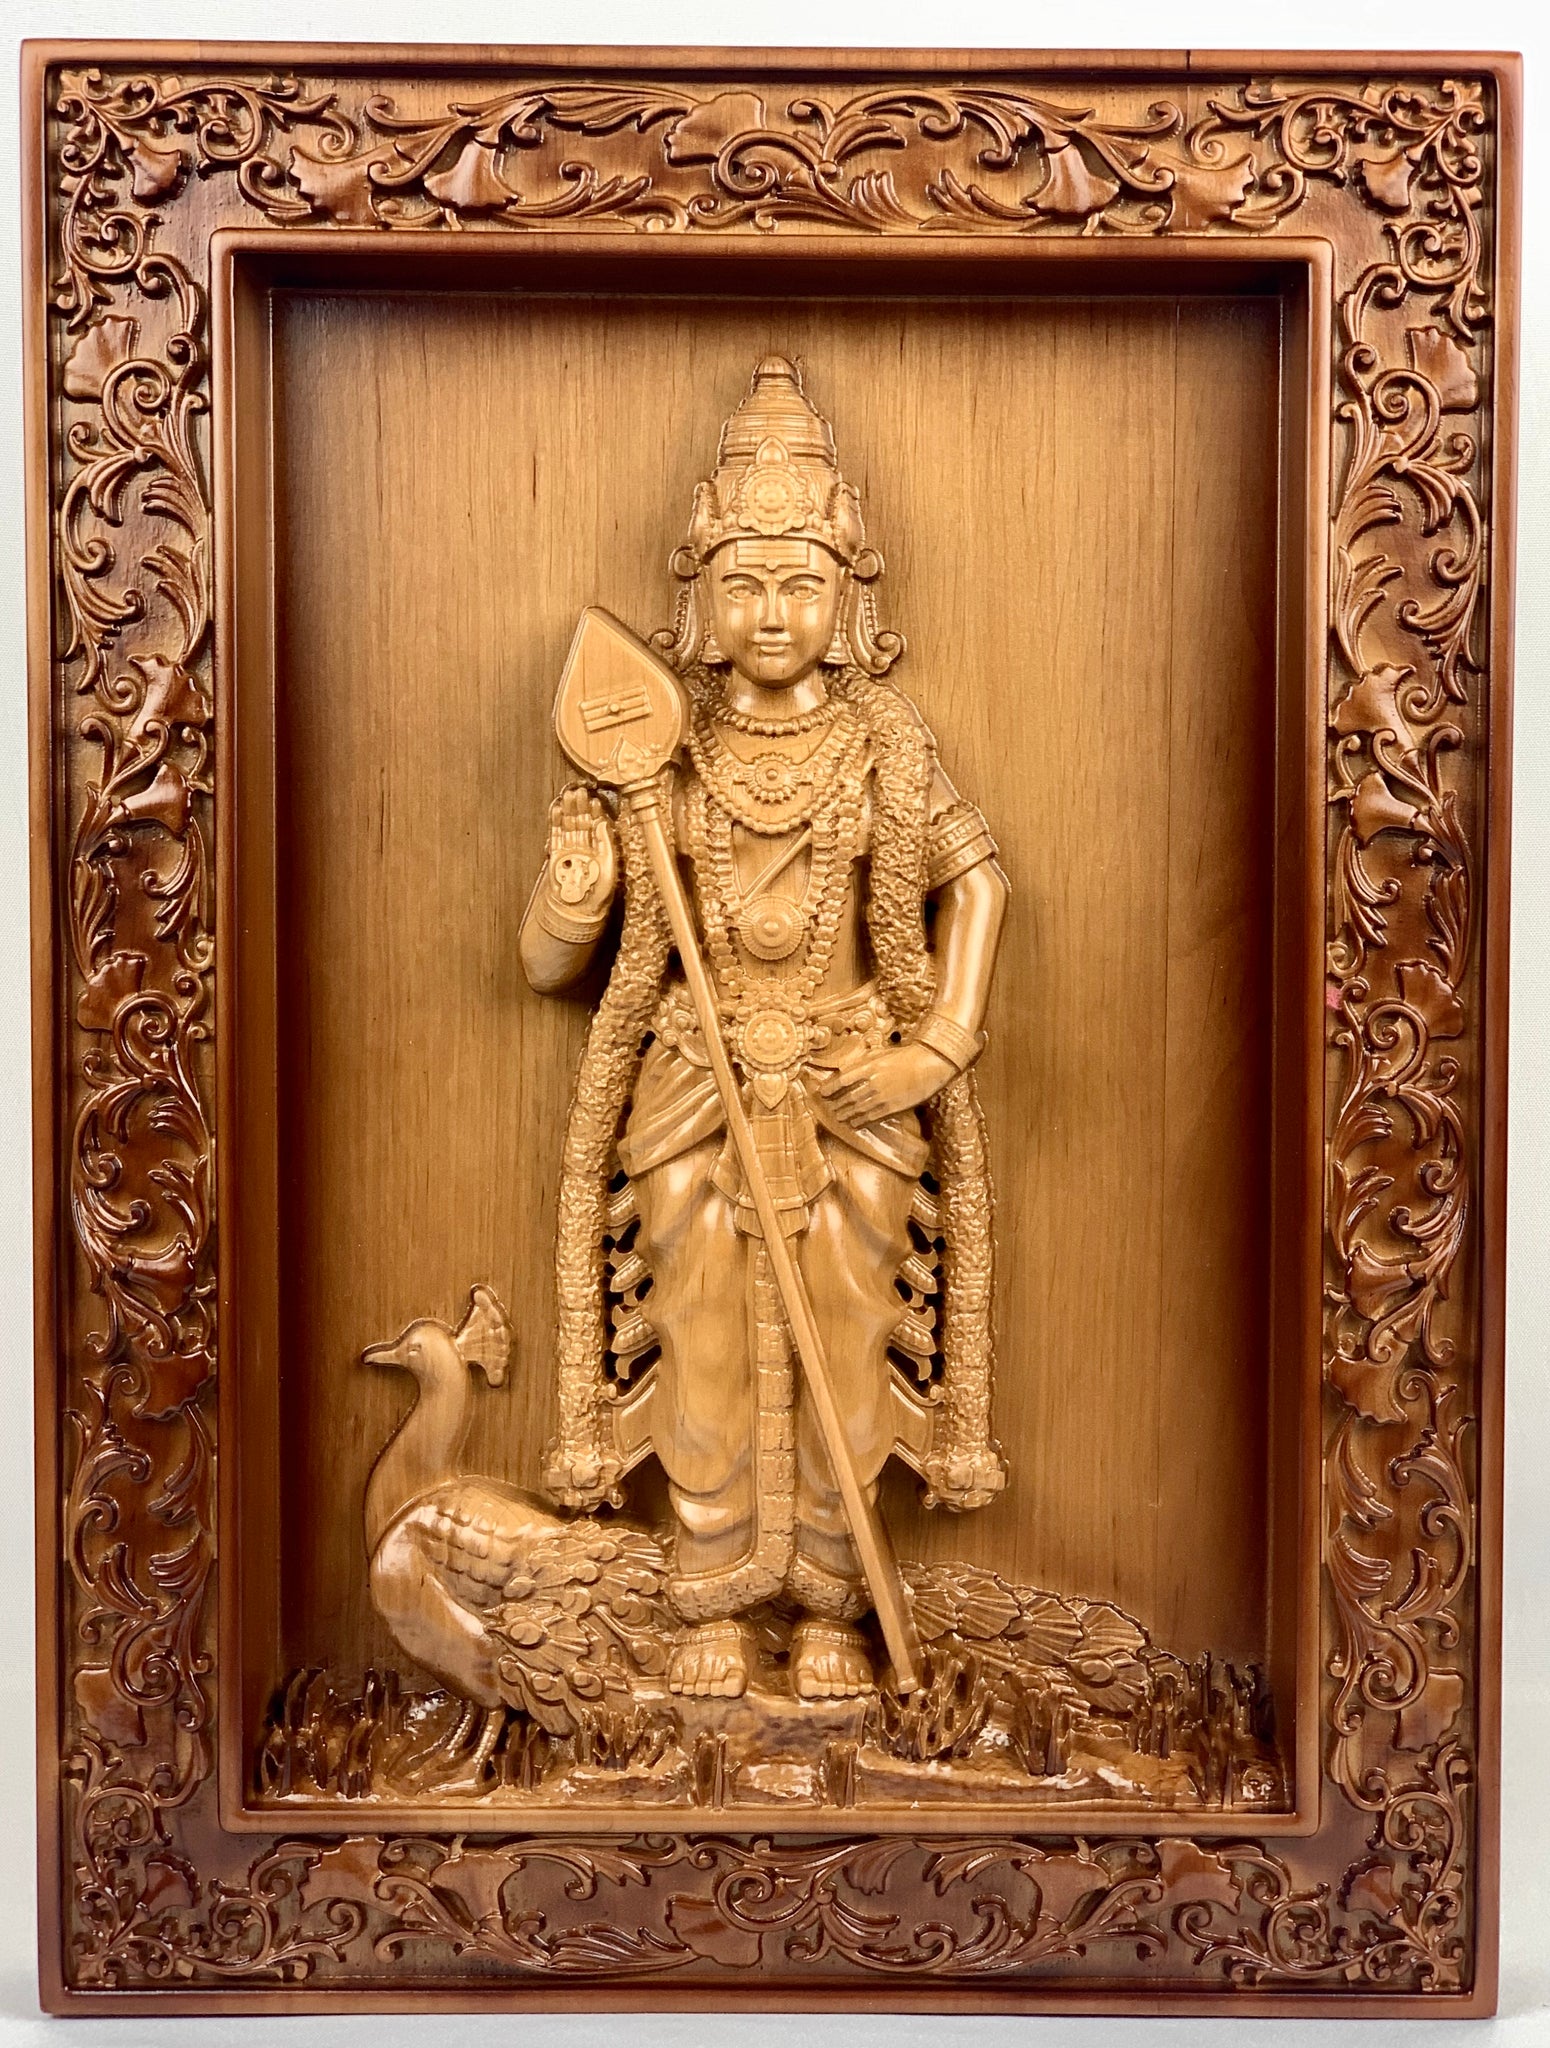 Lord Karthikeya wood carving - Alder wood panel 18" x 13"